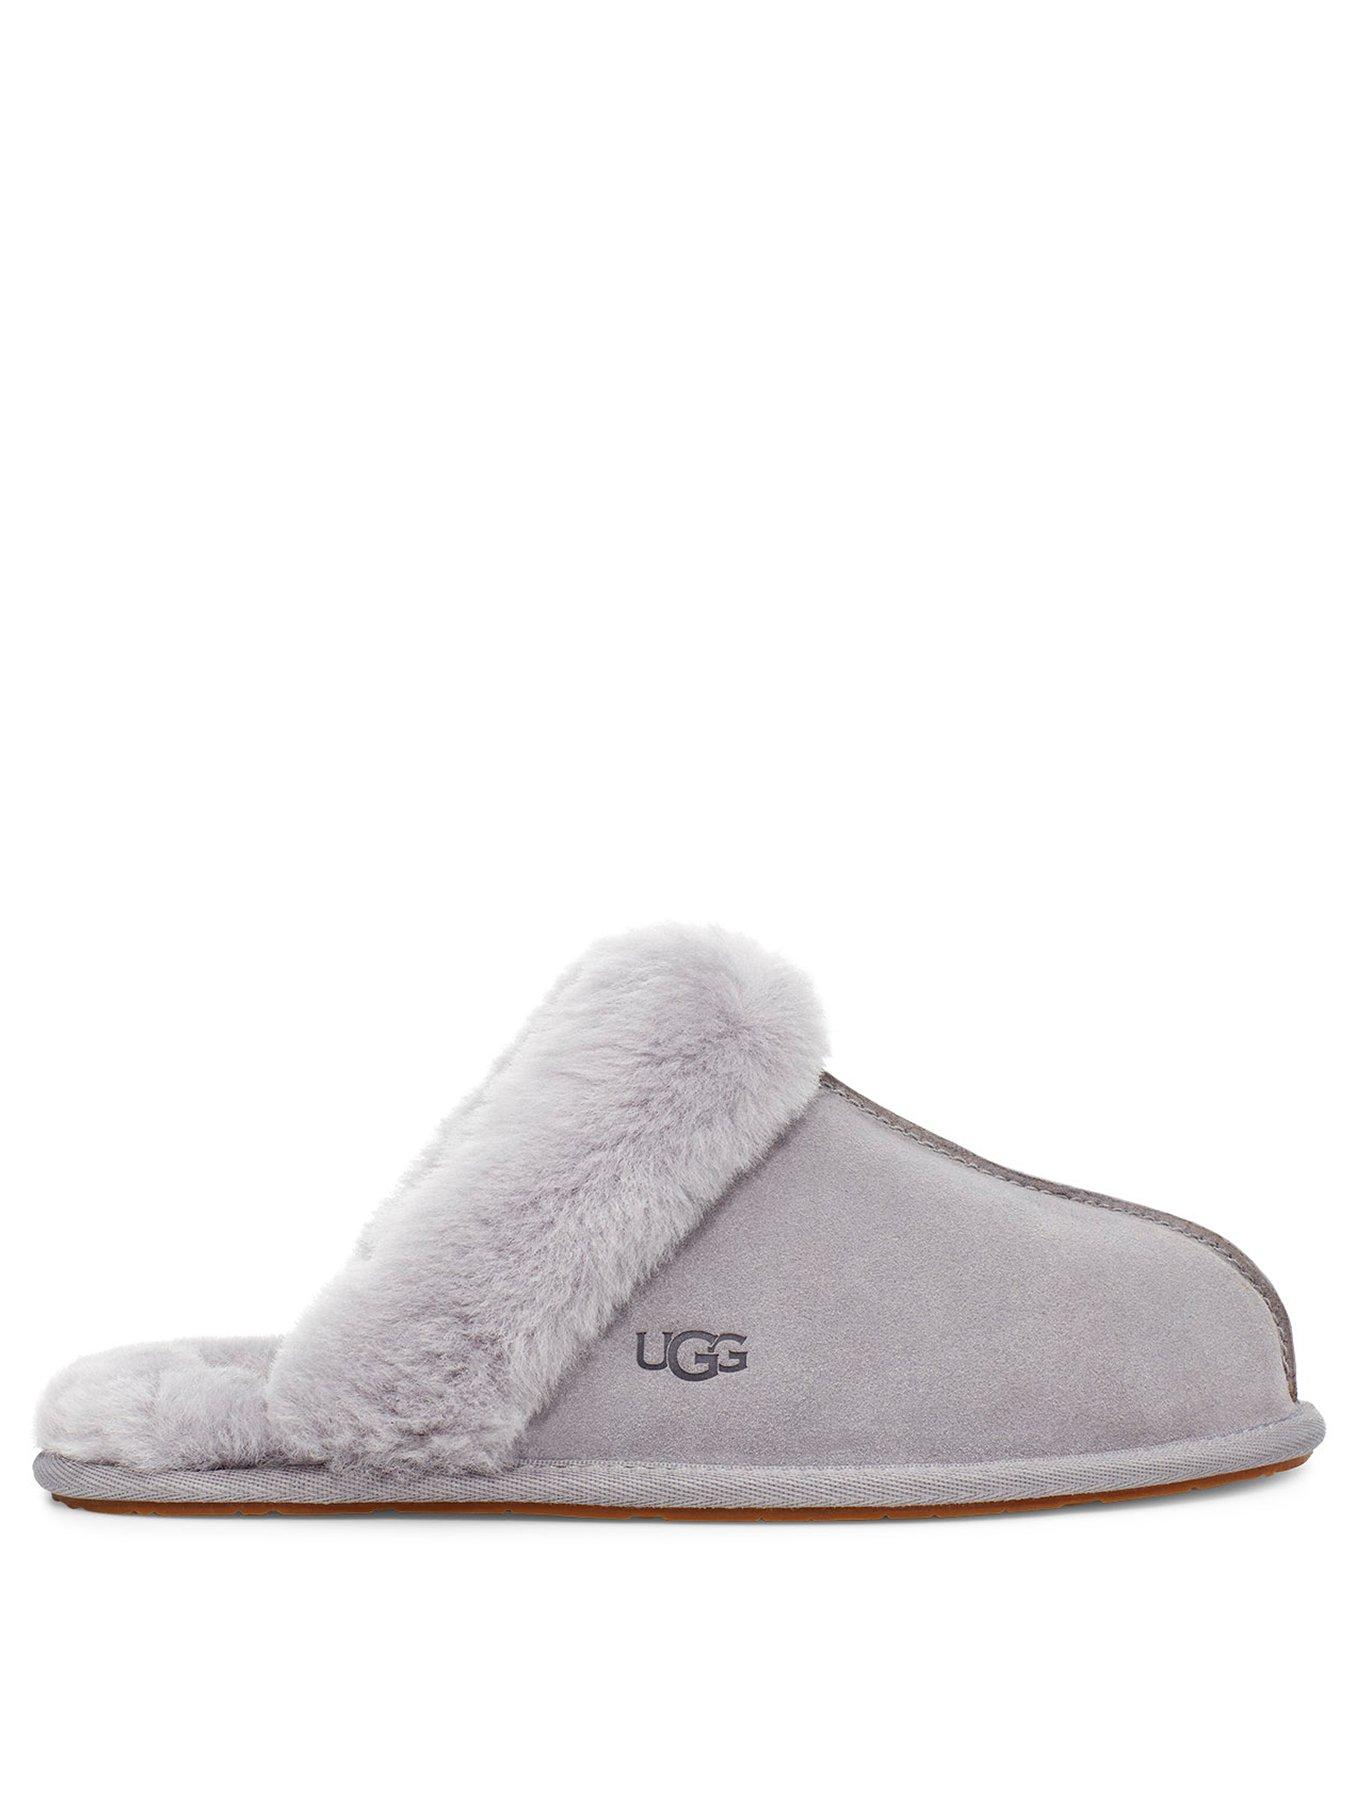 ugg slippers scuffette grey